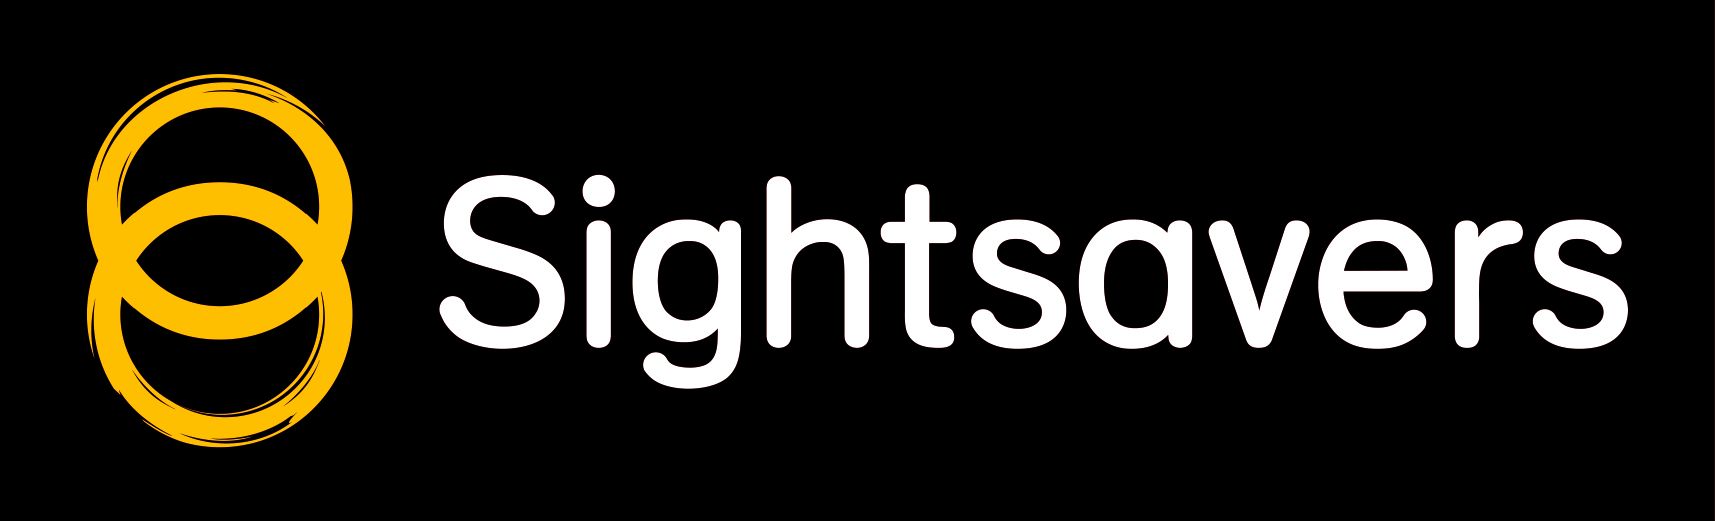 Sightsaver logo